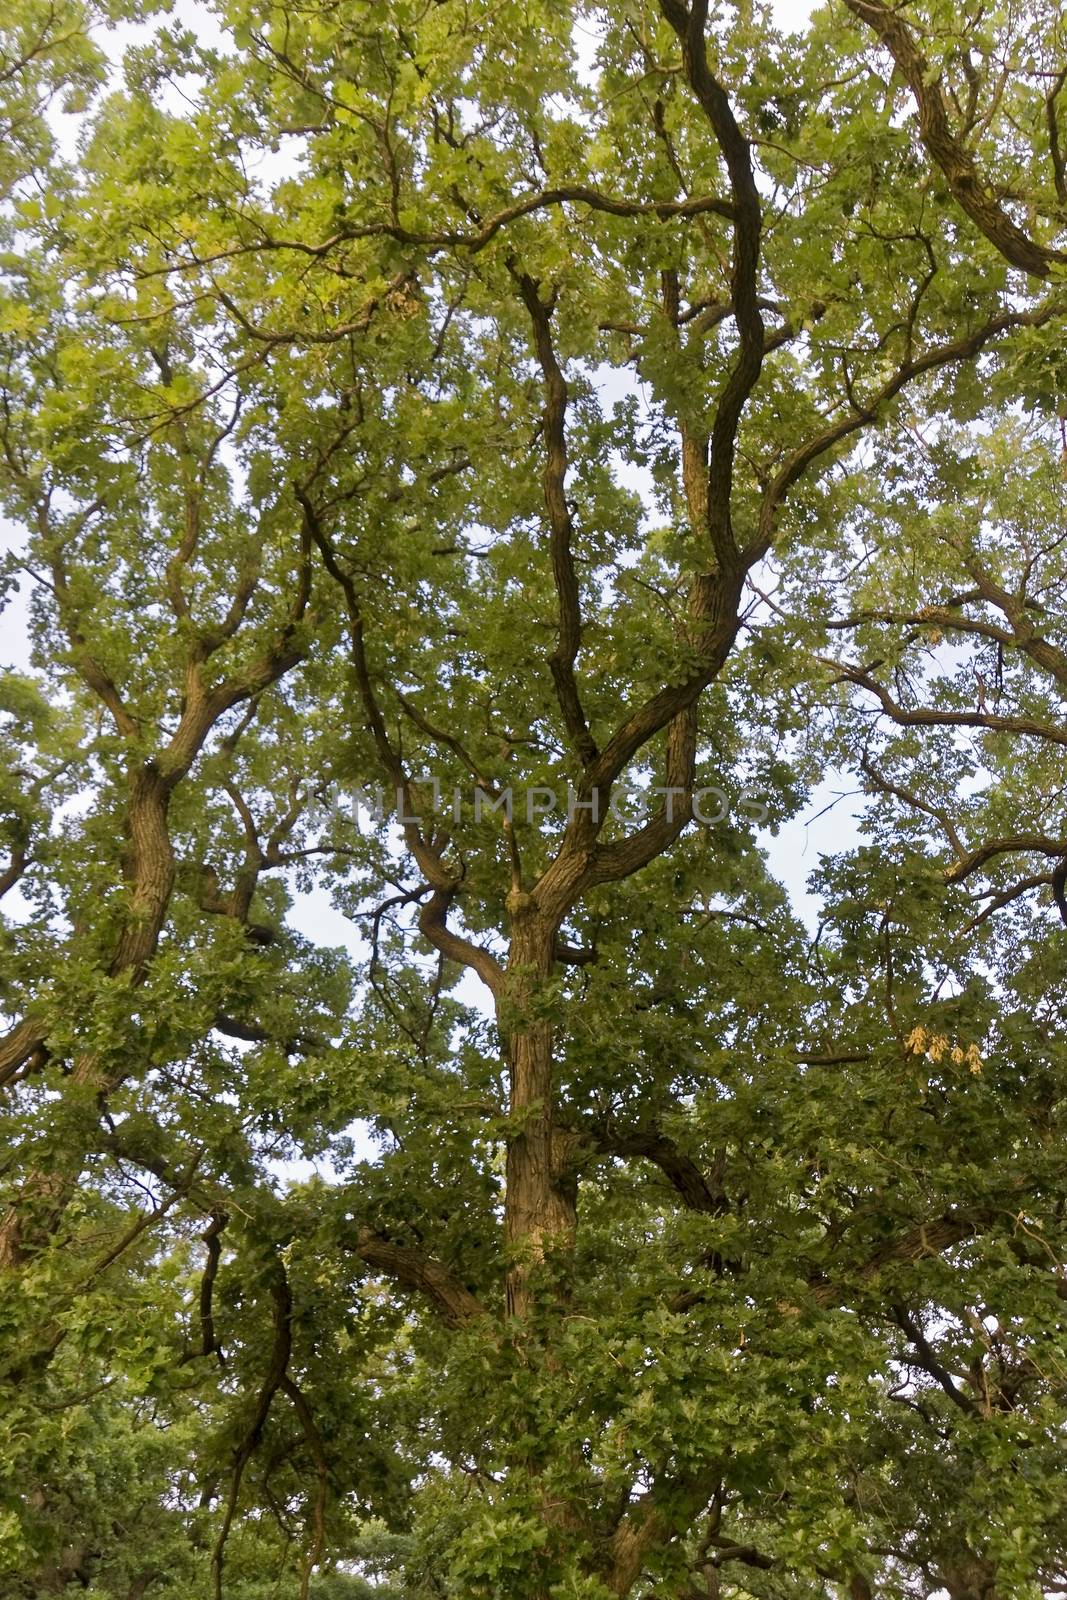 Trees at Augsburg Park in Richfield, Minnesota.